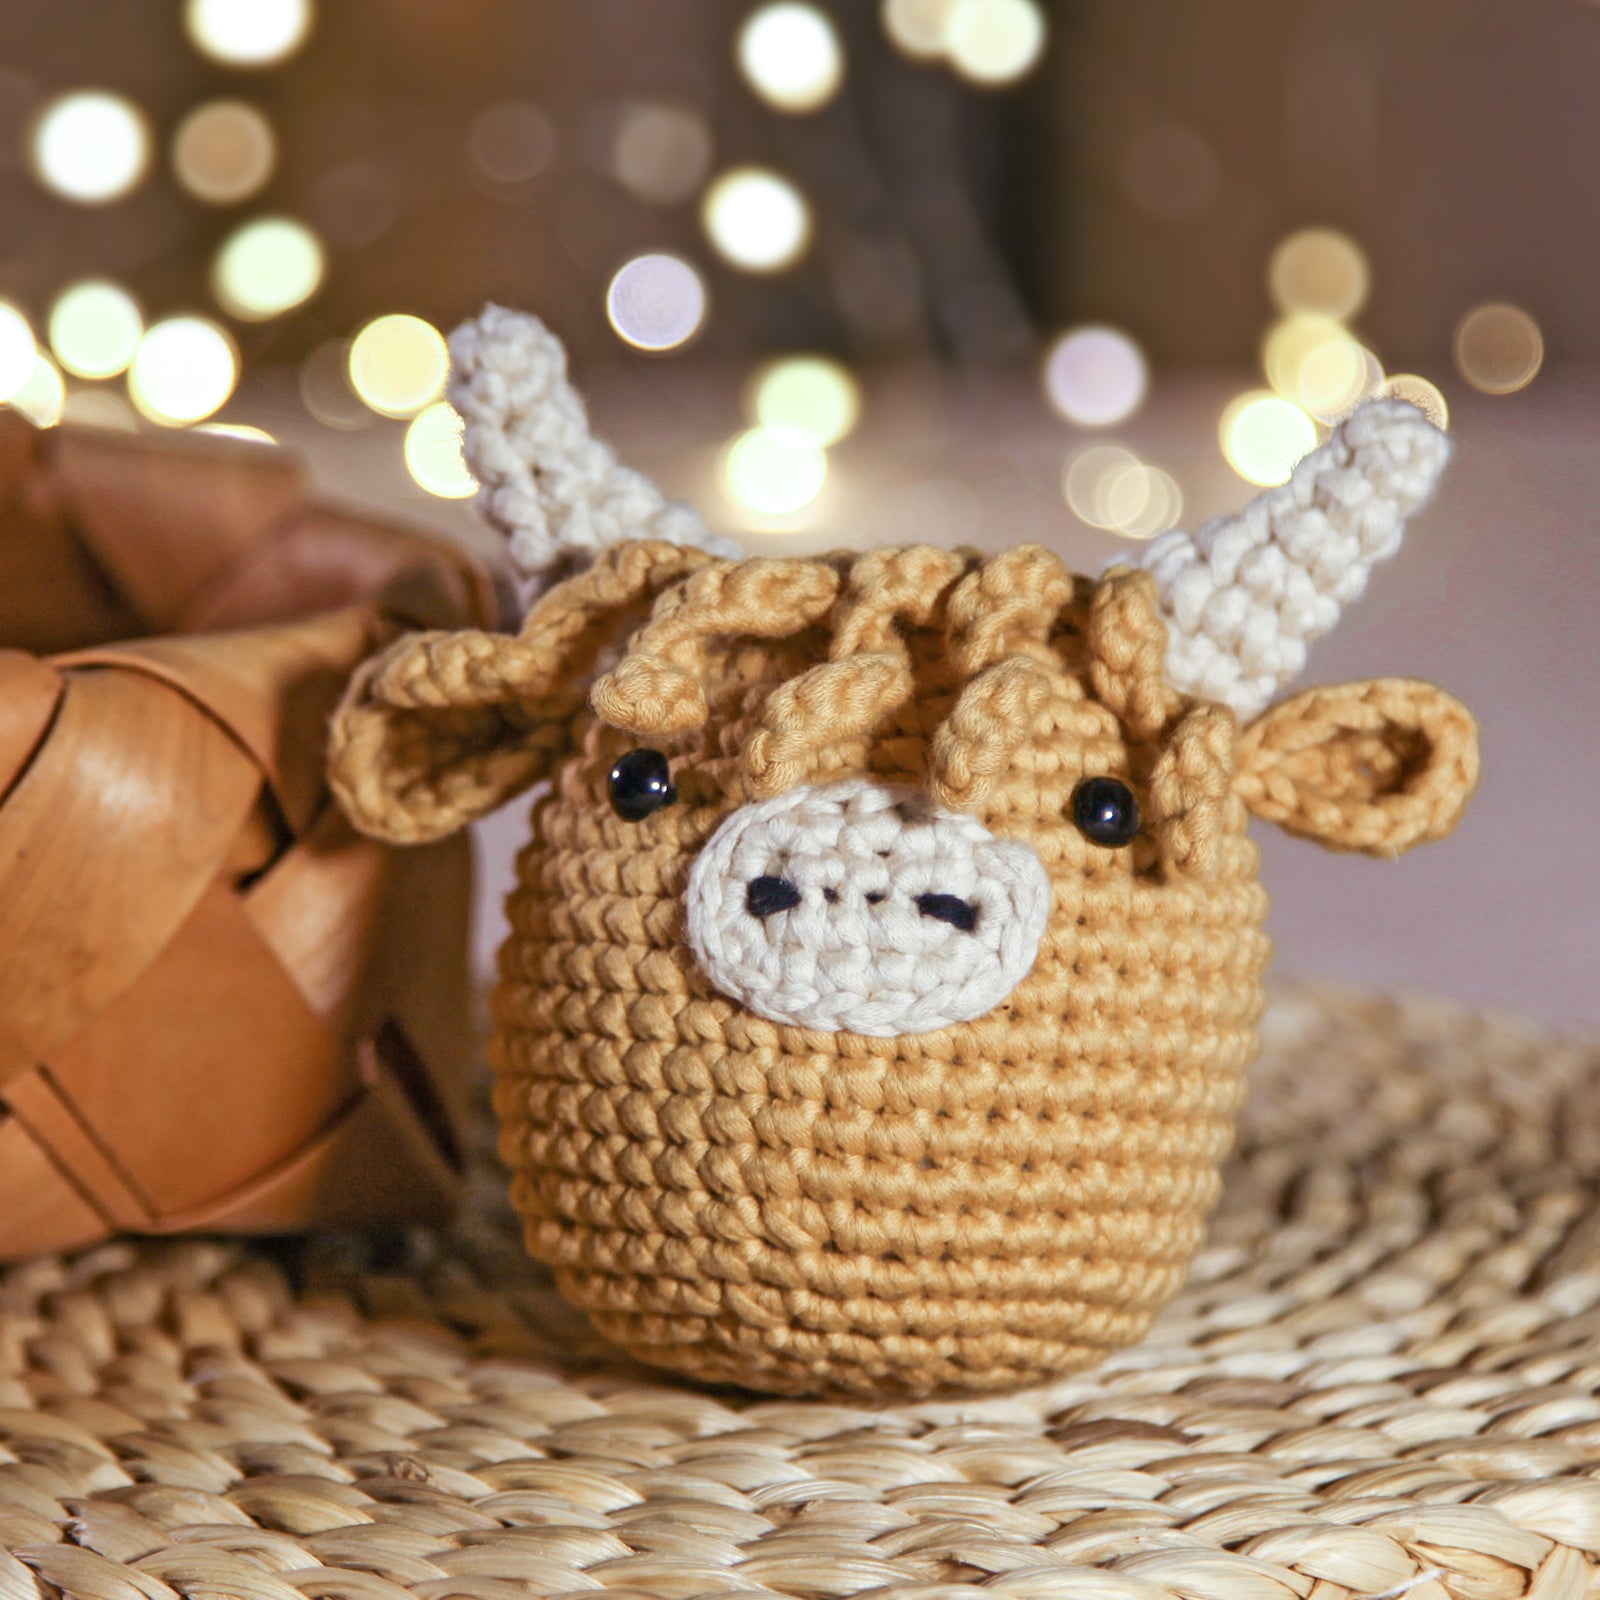 Learn To Crochet Kit - Avolotl